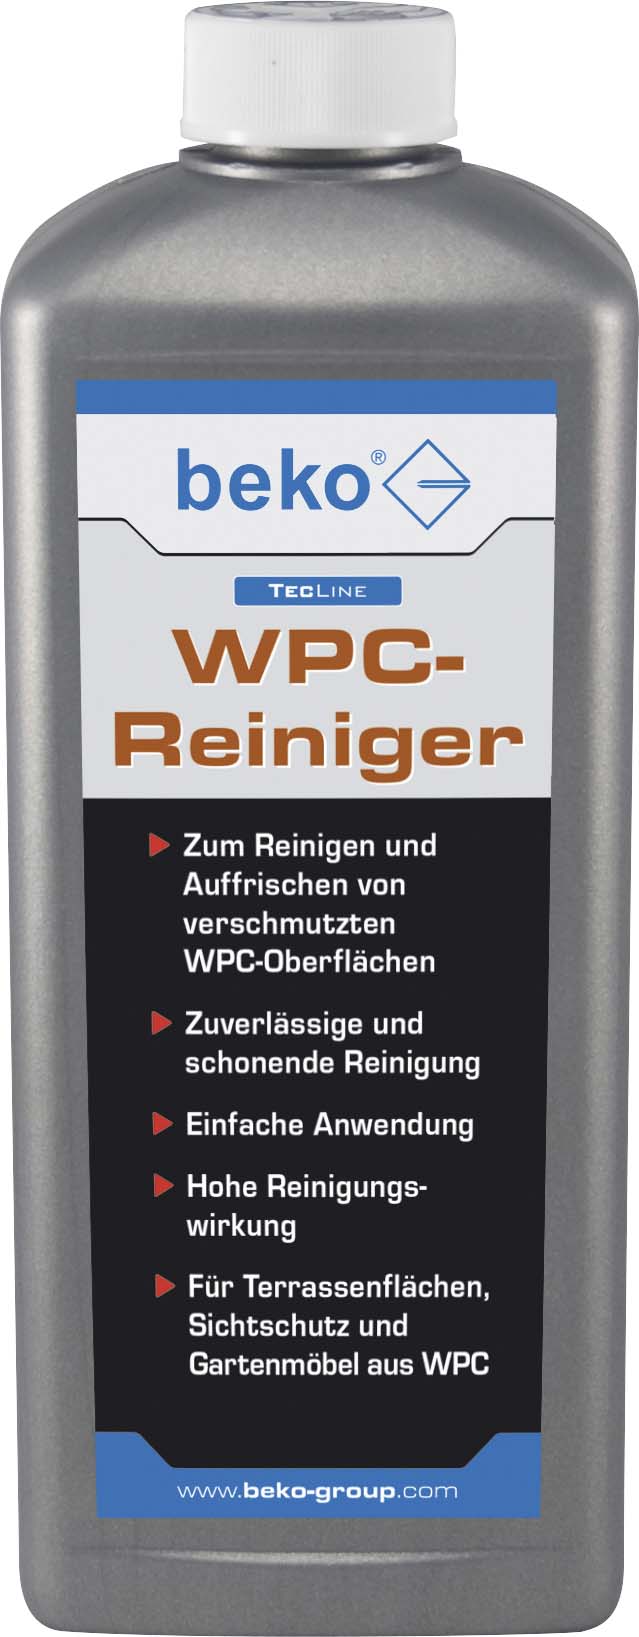 Beko TecLine WPC-Reiniger 1000ml 299 48 1000 - 299481000